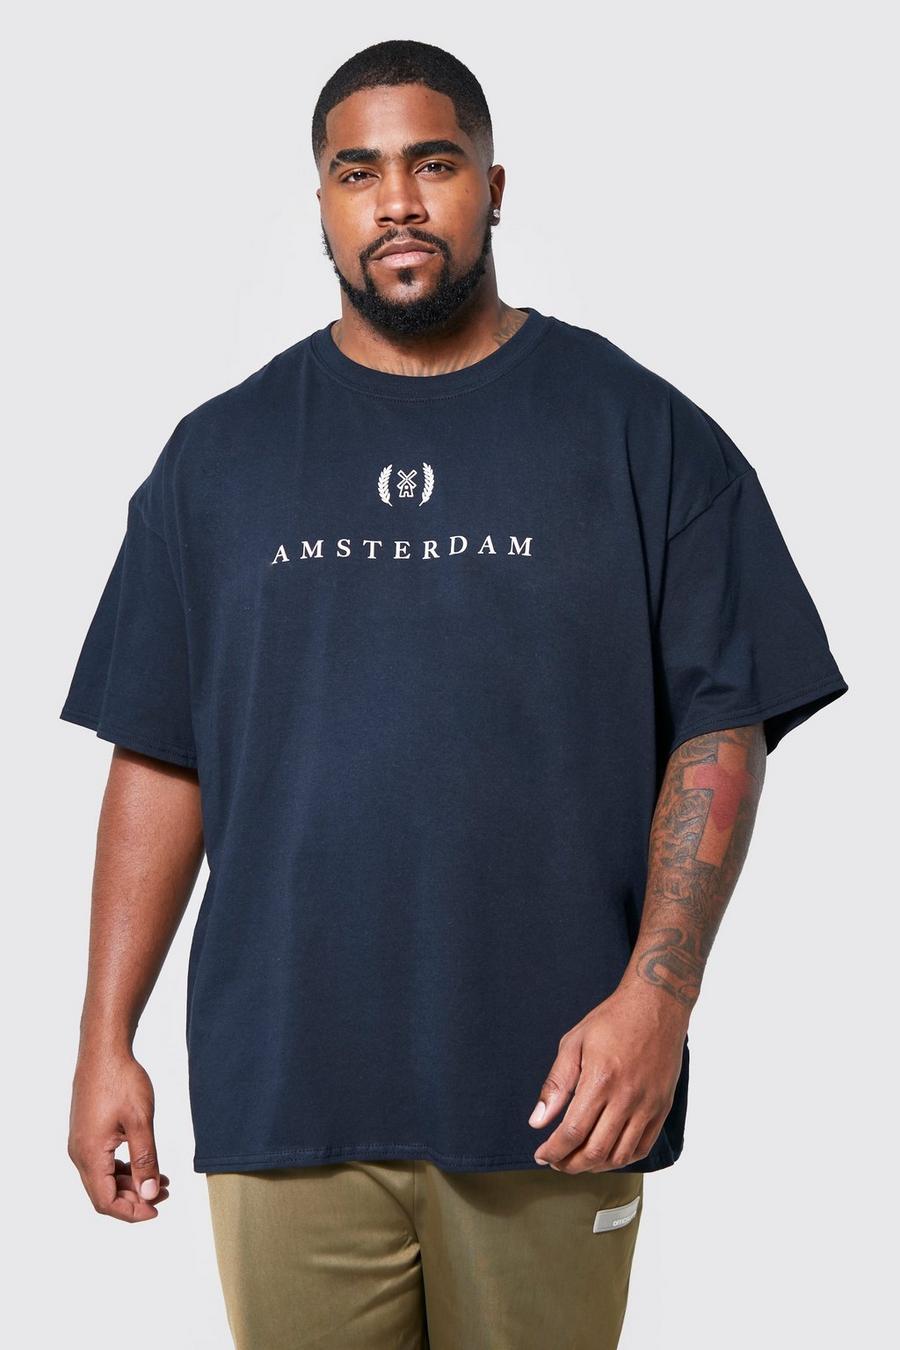 Plus T-Shirt mit Amsterdam City Print, Black noir